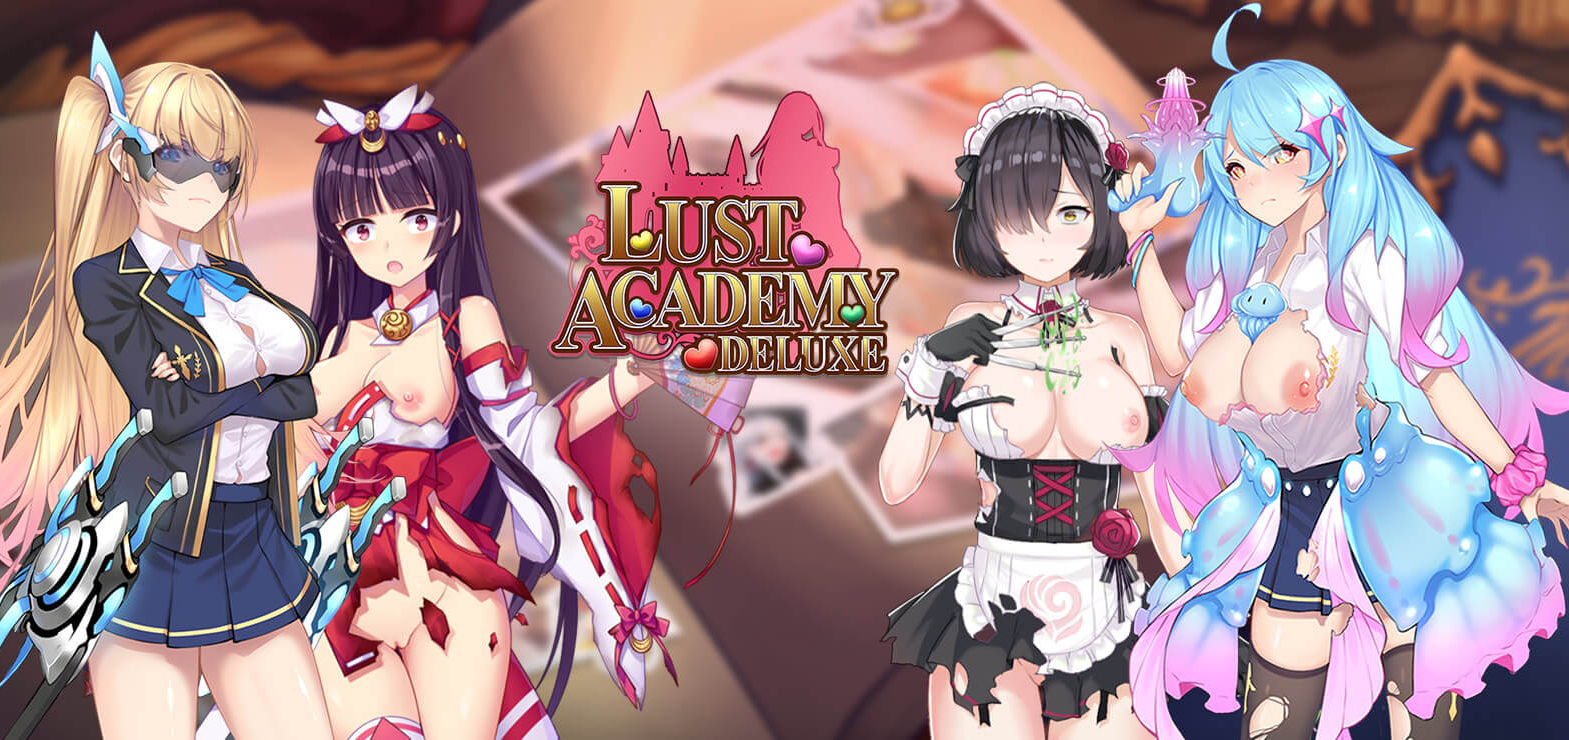 [18+ EN] Lust Academy Deluxe (v1.0.7) (MOD) – Huấn Luyện Mấy Em Phù Thủy Trong Học Viện Pháp Thuật | Android, PC